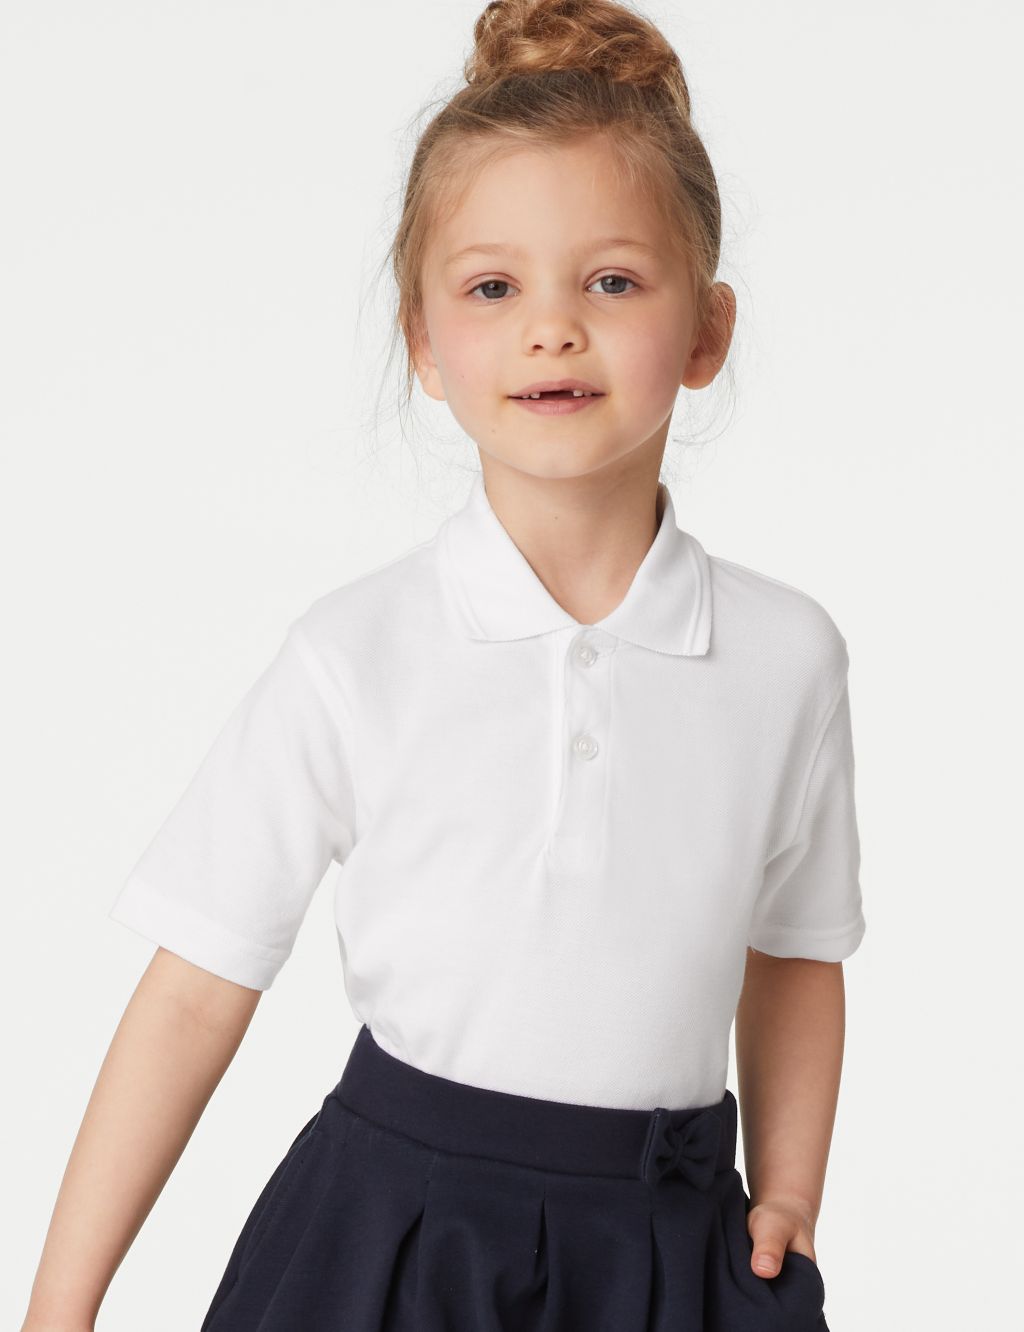 5pk Unisex Pure Cotton School Polo Shirts (2-18 Yrs) image 2